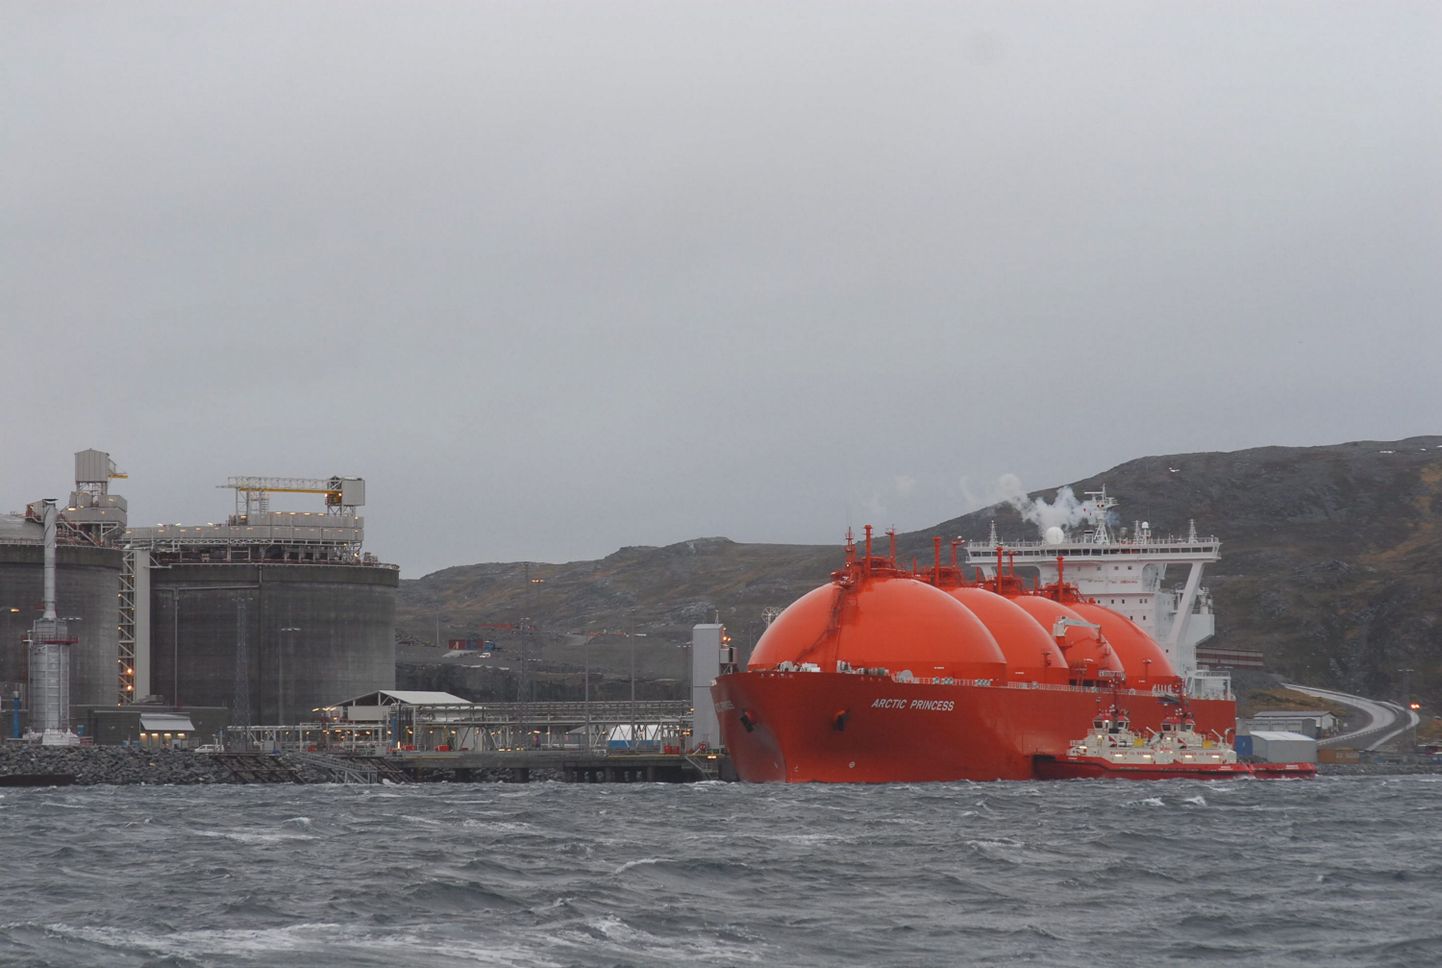 Veeldatud gaasi (LNG) tanker Arctic Princess Statoili LNG tehases Melkøyas Norras.